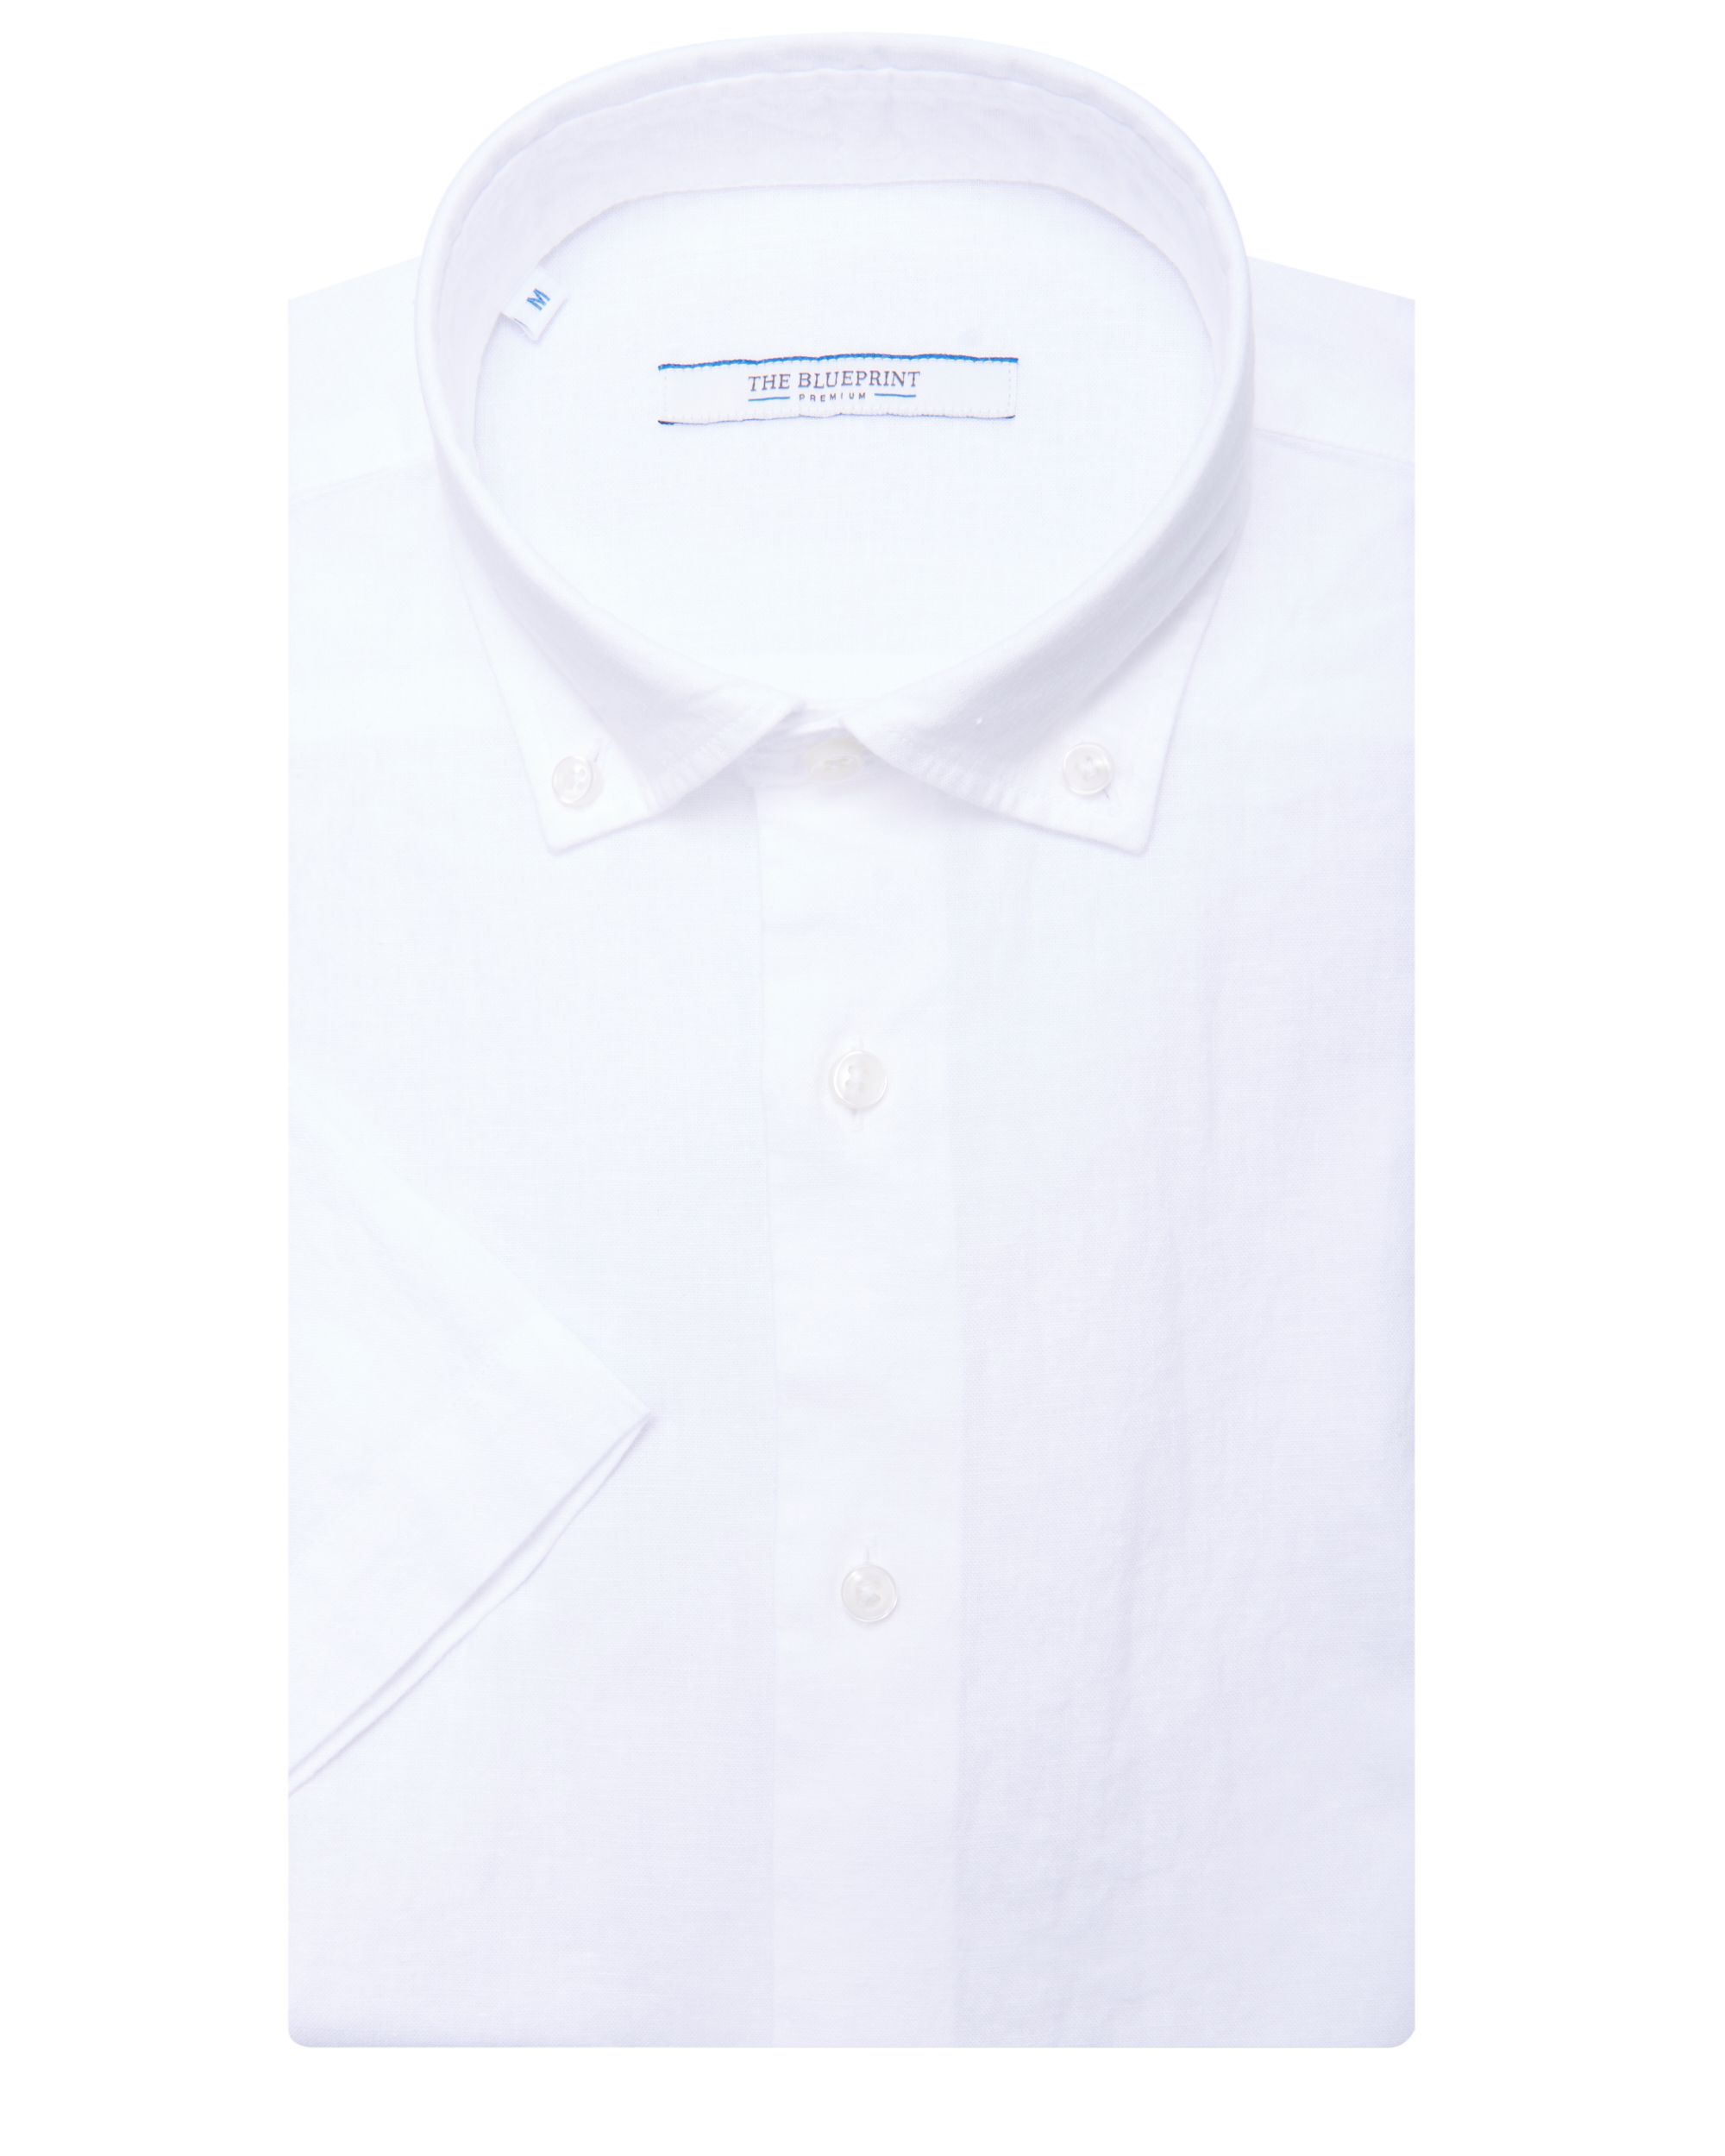 The BLUEPRINT Premium Casual Overhemd KM Wit uni 077930-001-L